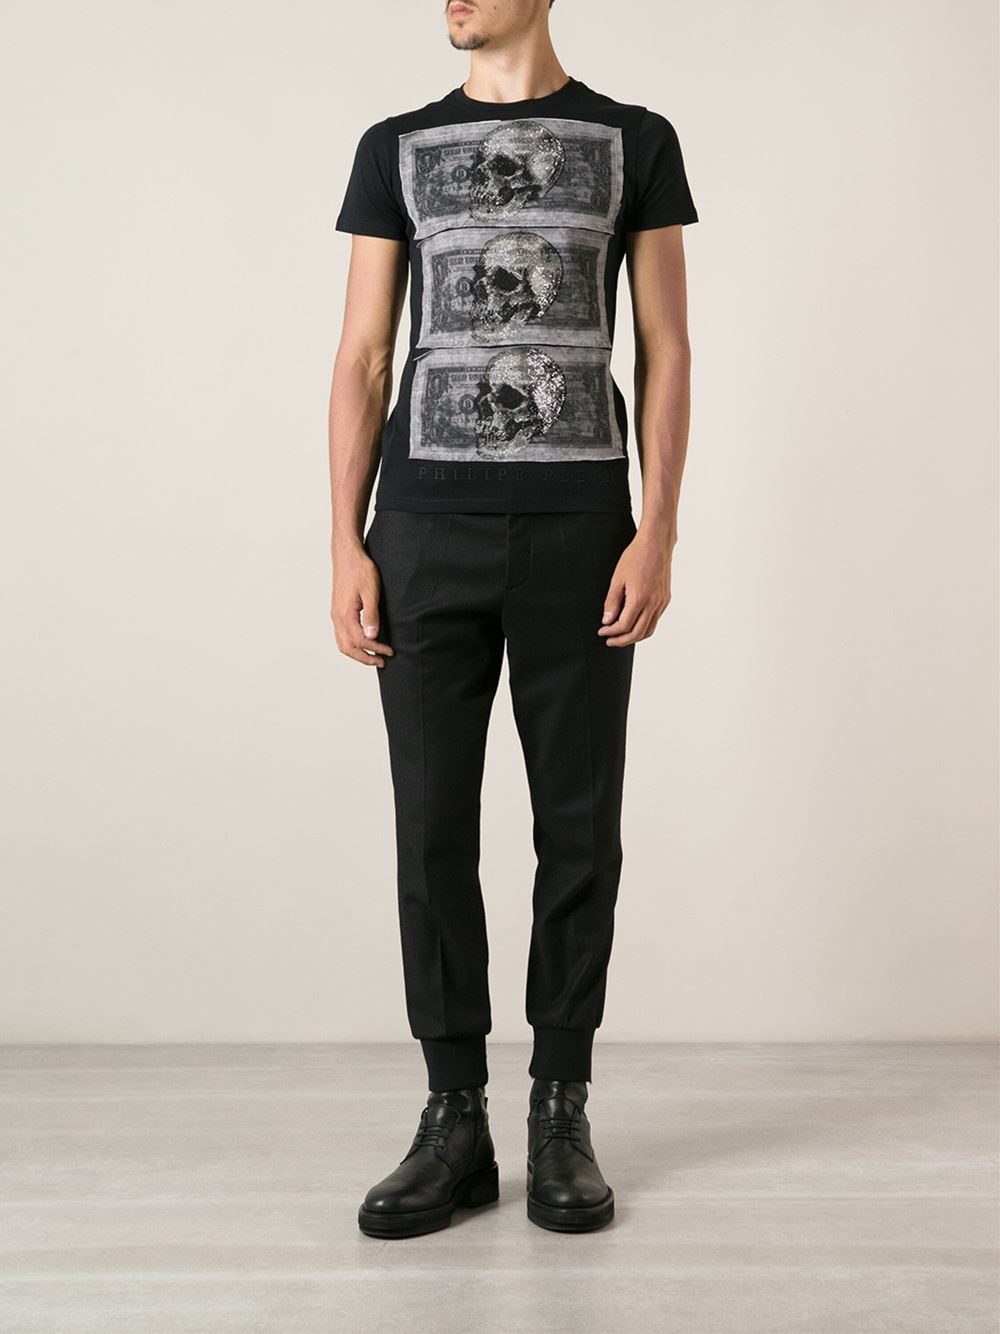 Philipp Plein Dollar and Skull Print Tshirt in Black for Men - Lyst